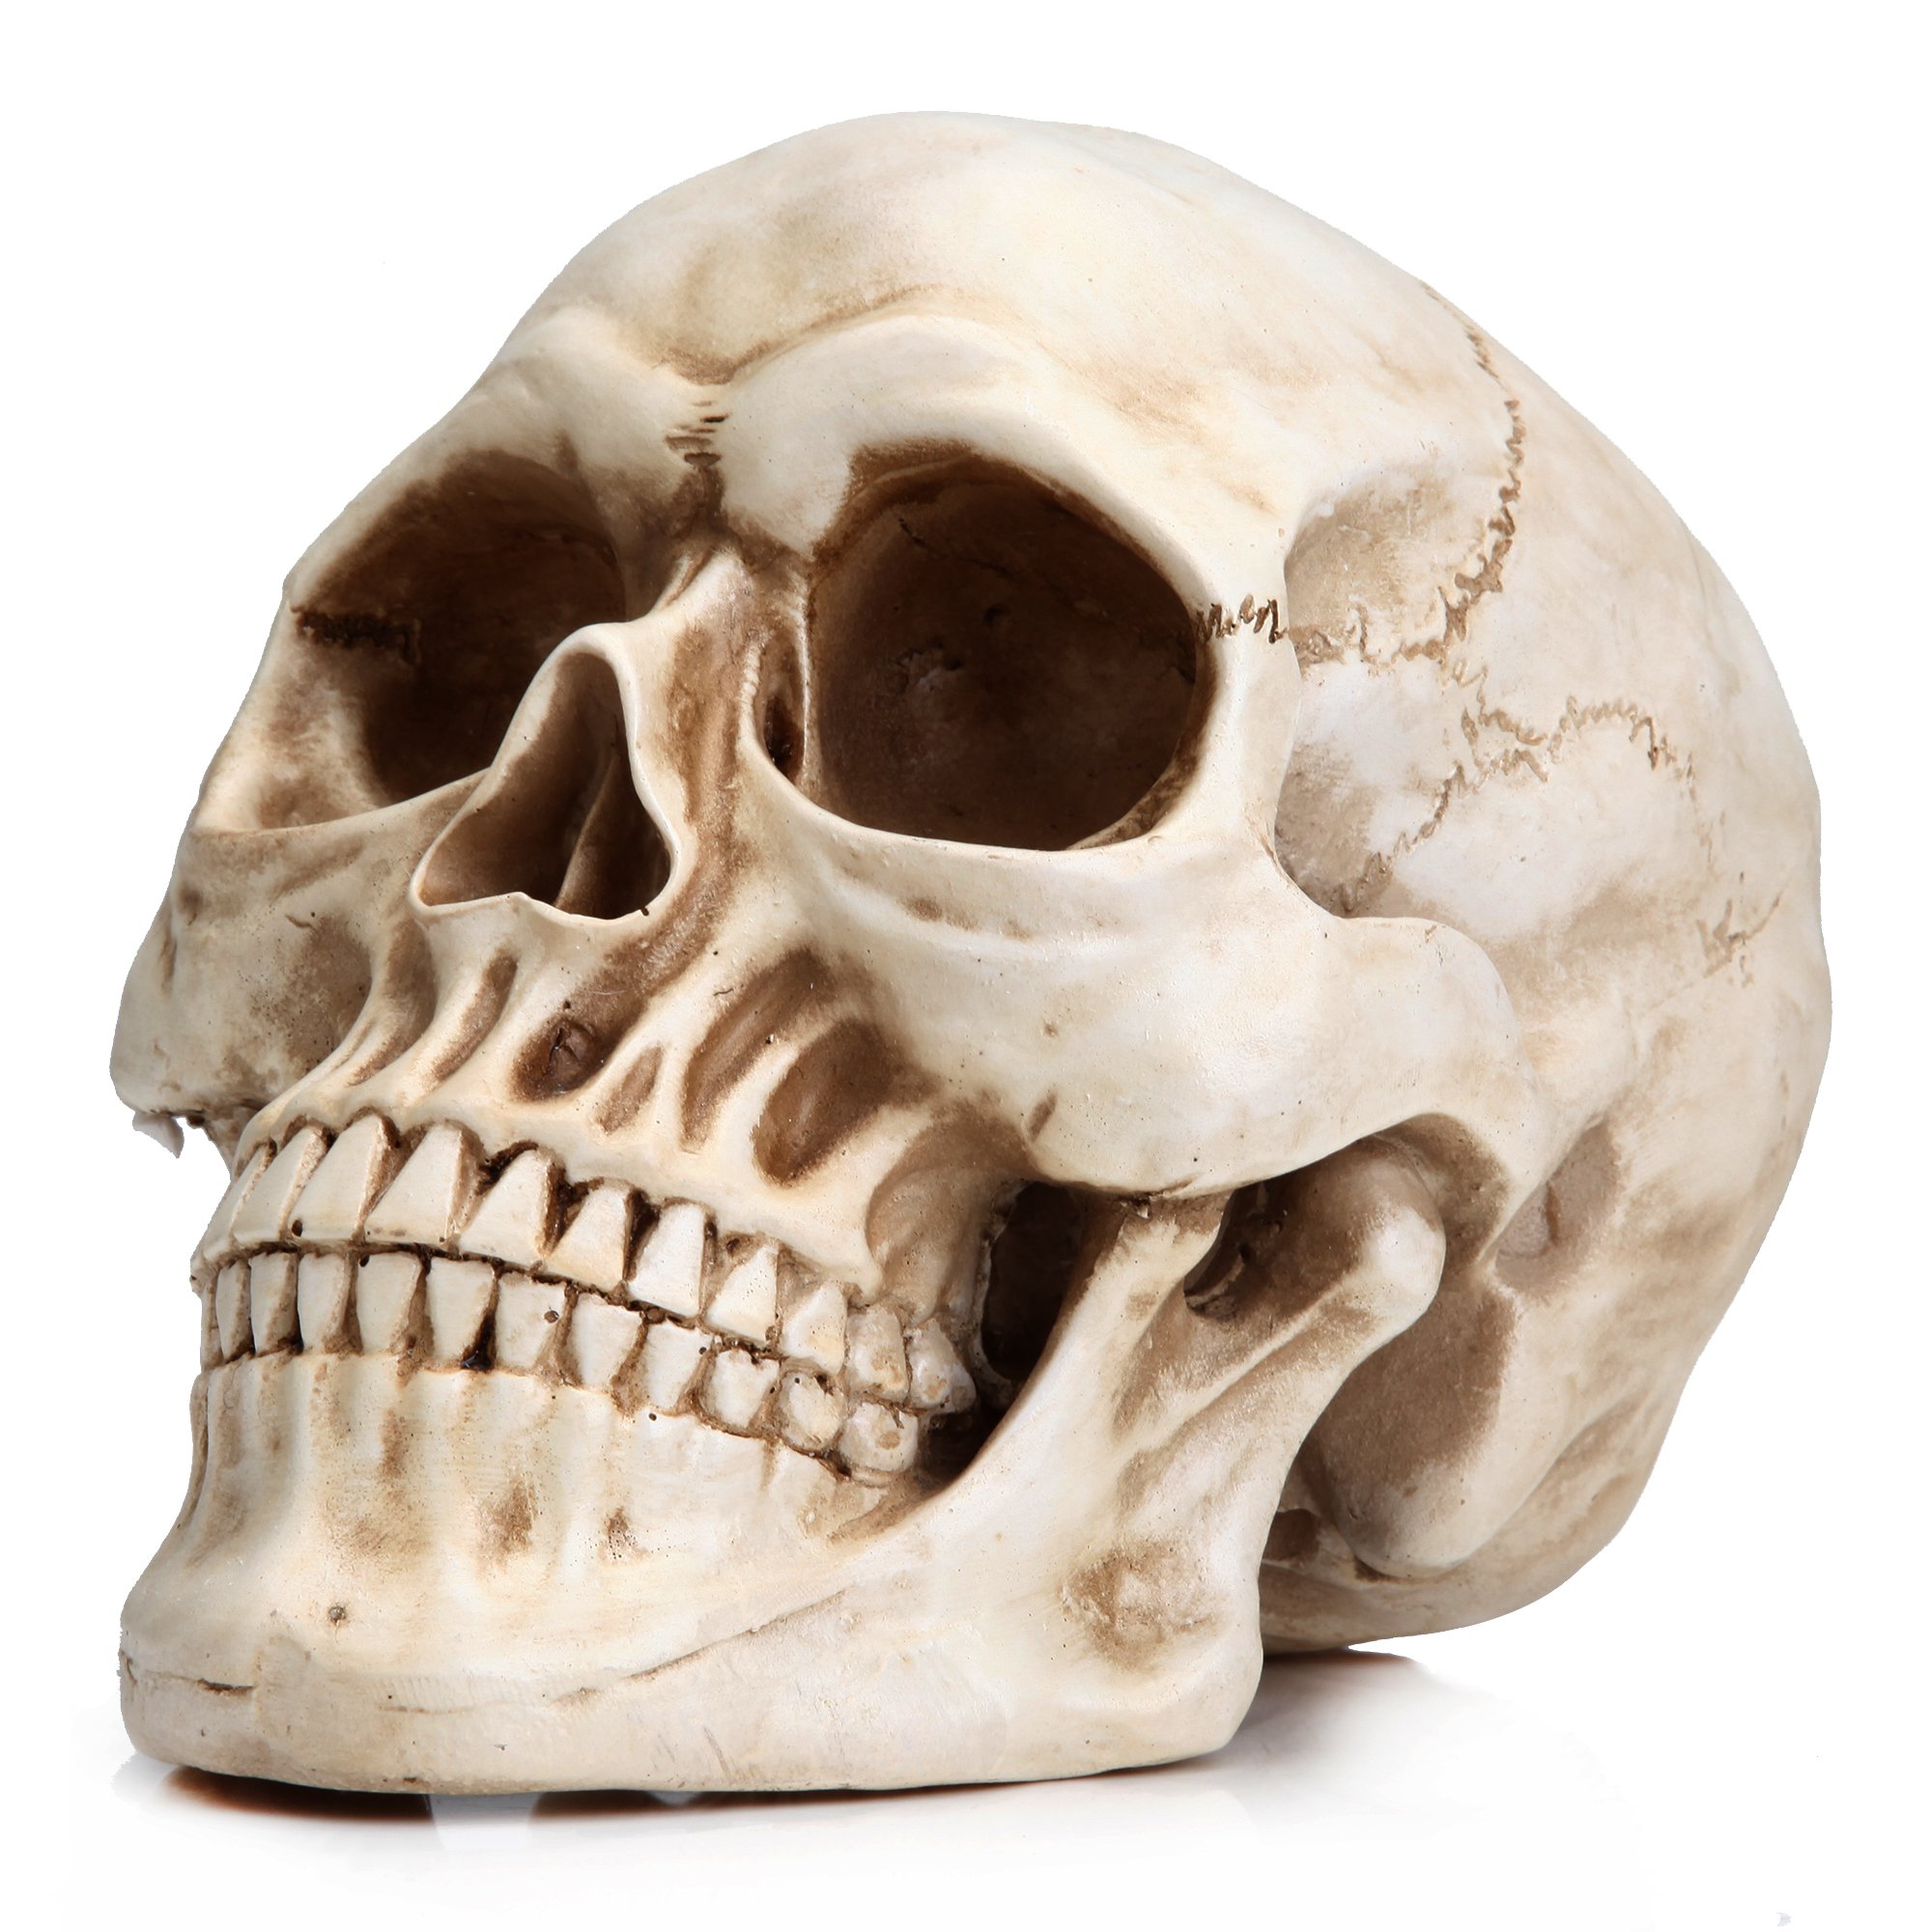 Halloween Human Skull Model 1:1 Replica Realistic Skull Head Bone Model